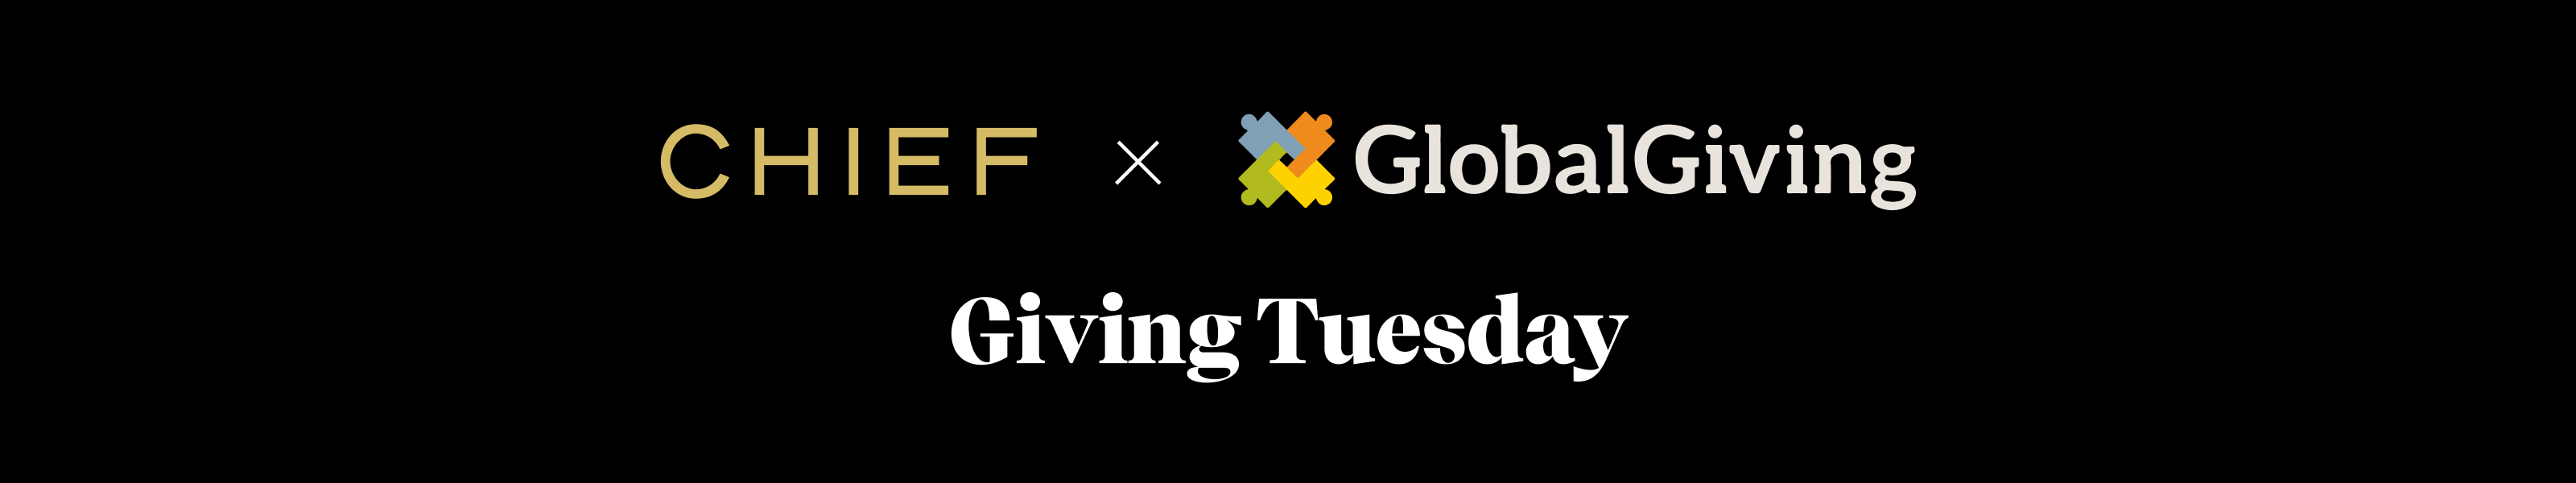 Chief x GlobalGiving | GivingTuesday